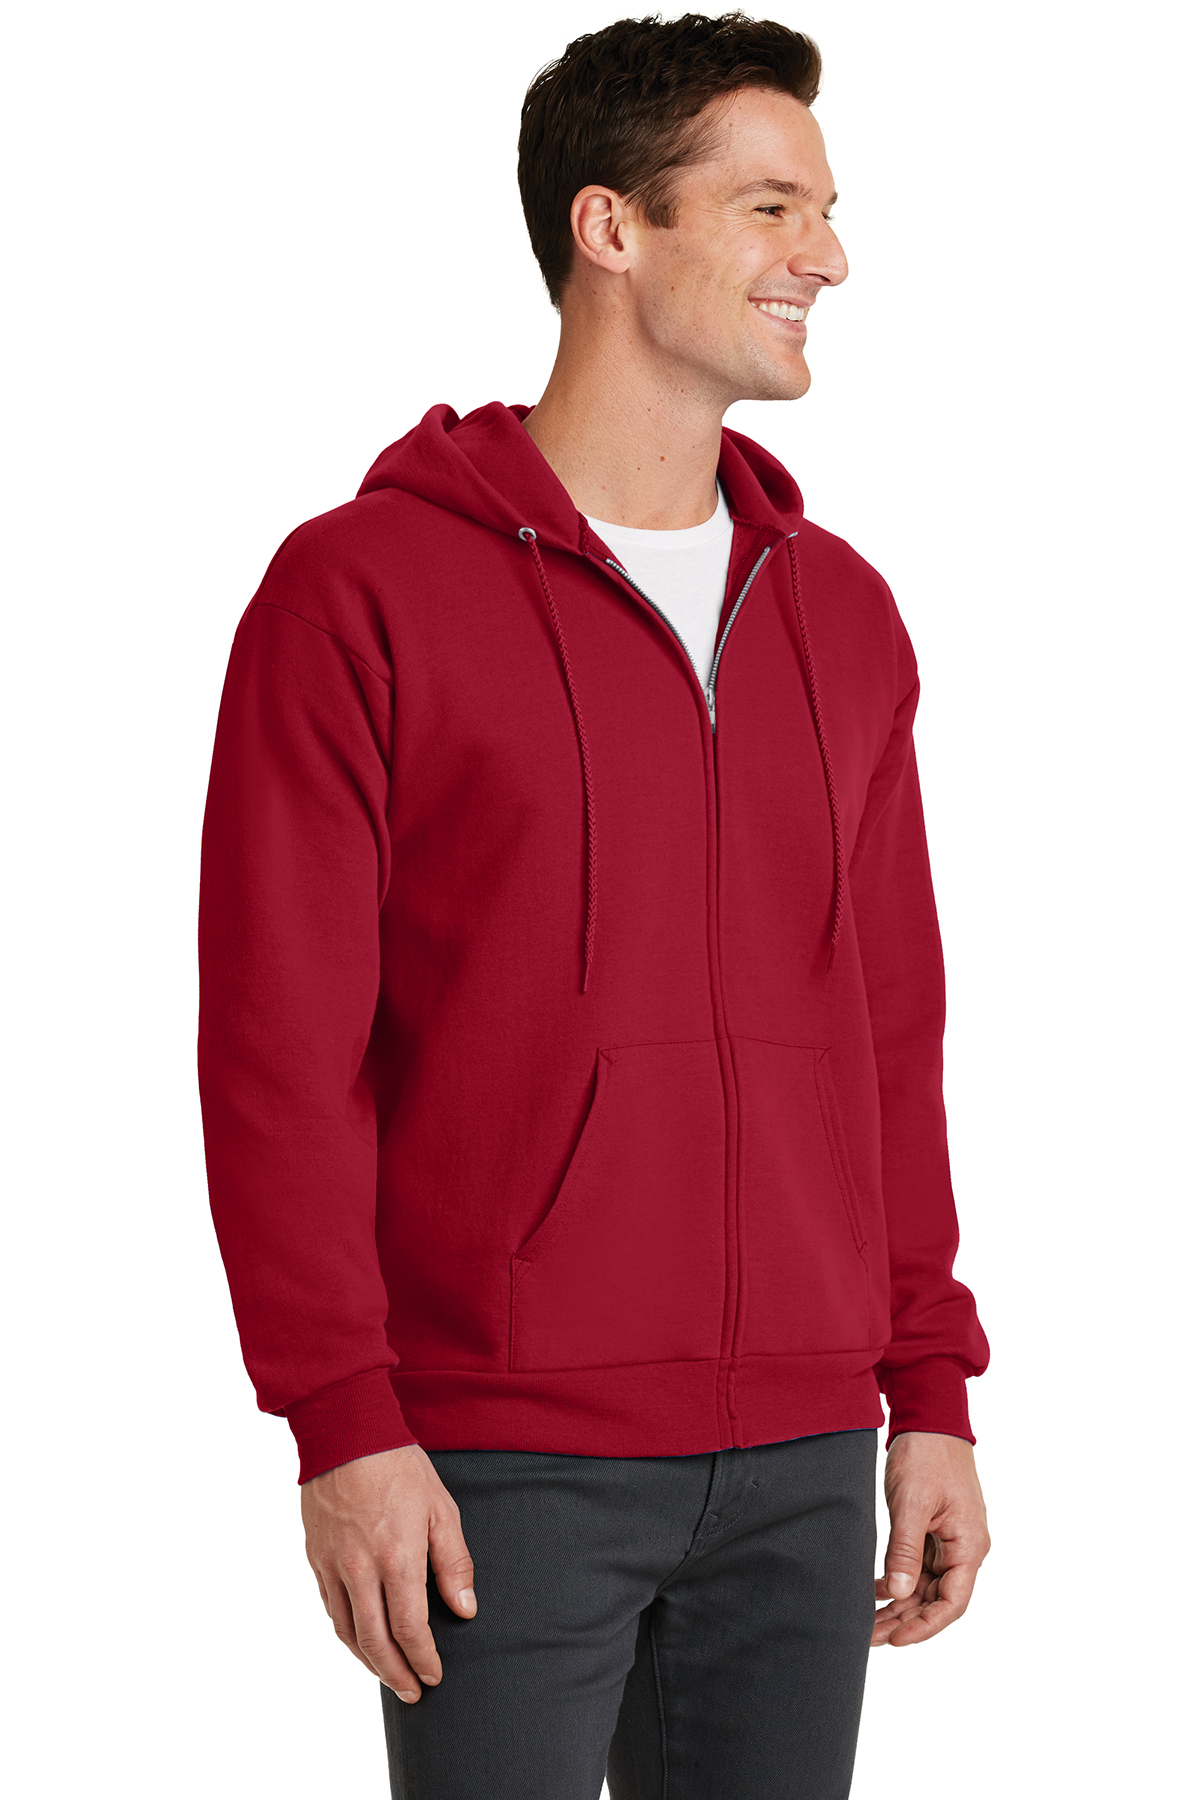 Medium Port & Company PC78ZH Mens Core Fleece Full-Zip Hooded Sweatshirt44; Neon Green 